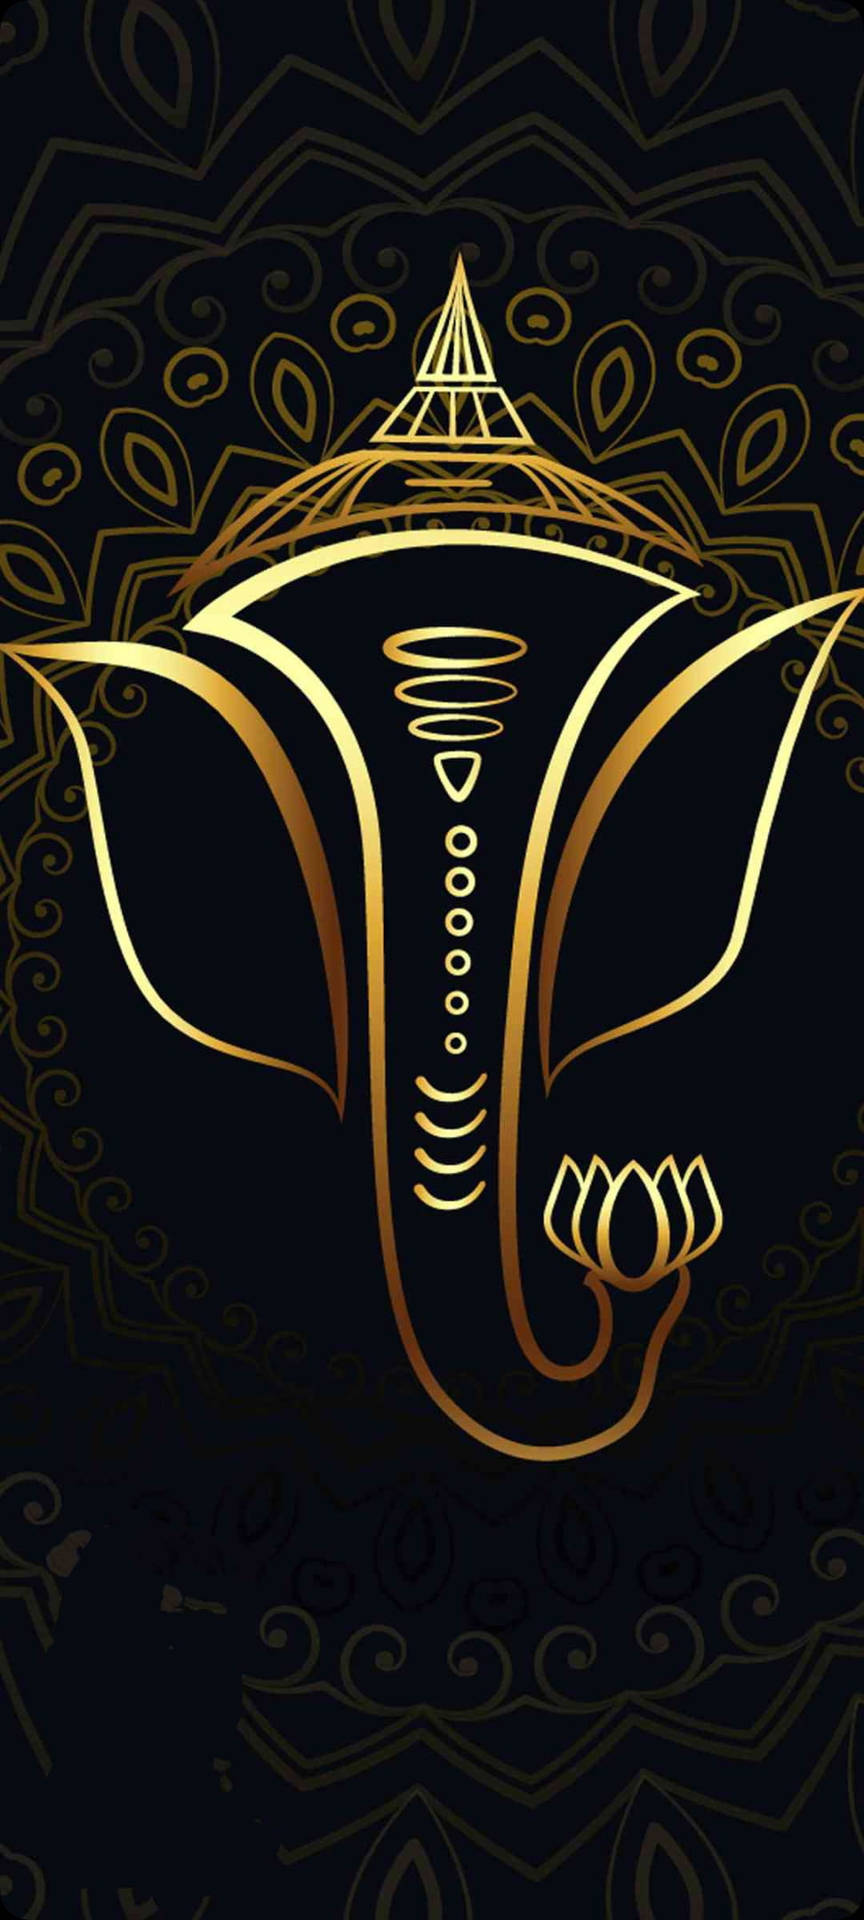 Ganesh Golden Elephant IPhone Wallpaper